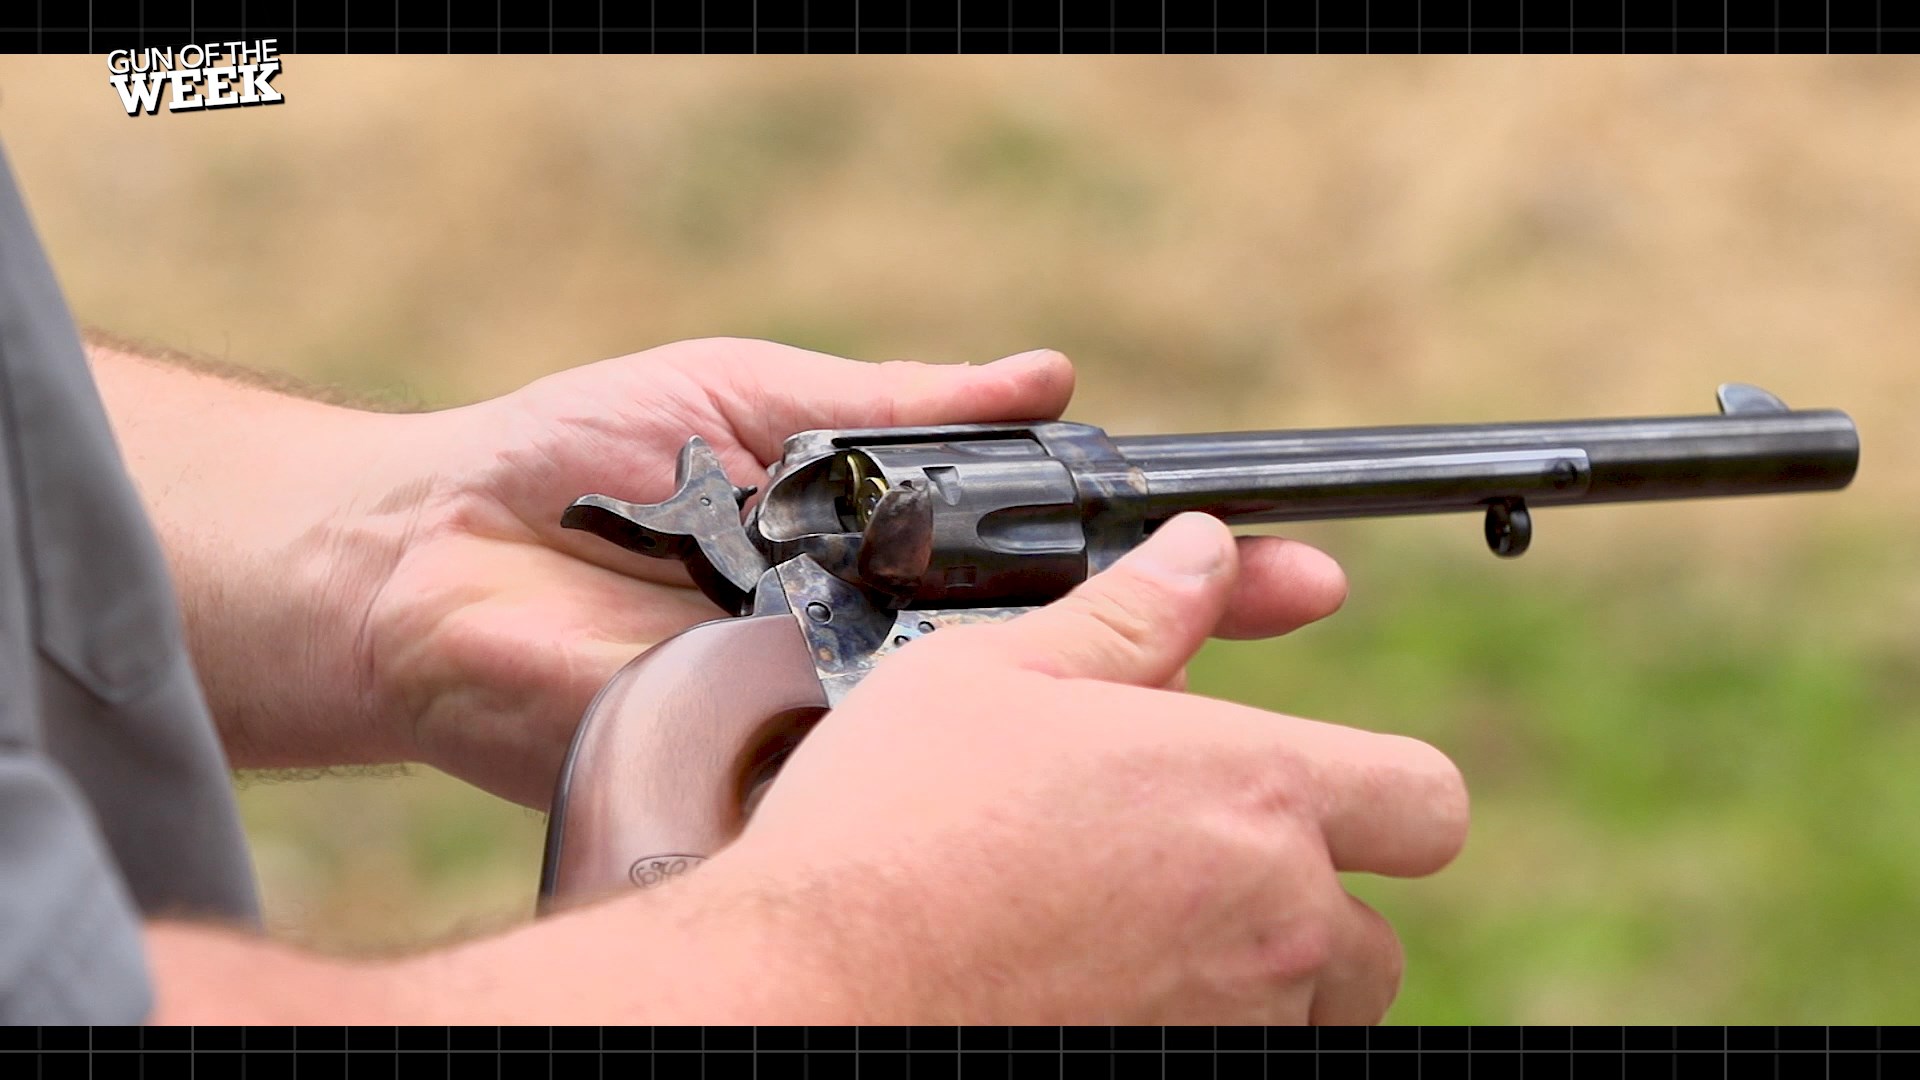 Outdoors GUN OF THE WEEK revolver Cimarron Model P in hands side profile